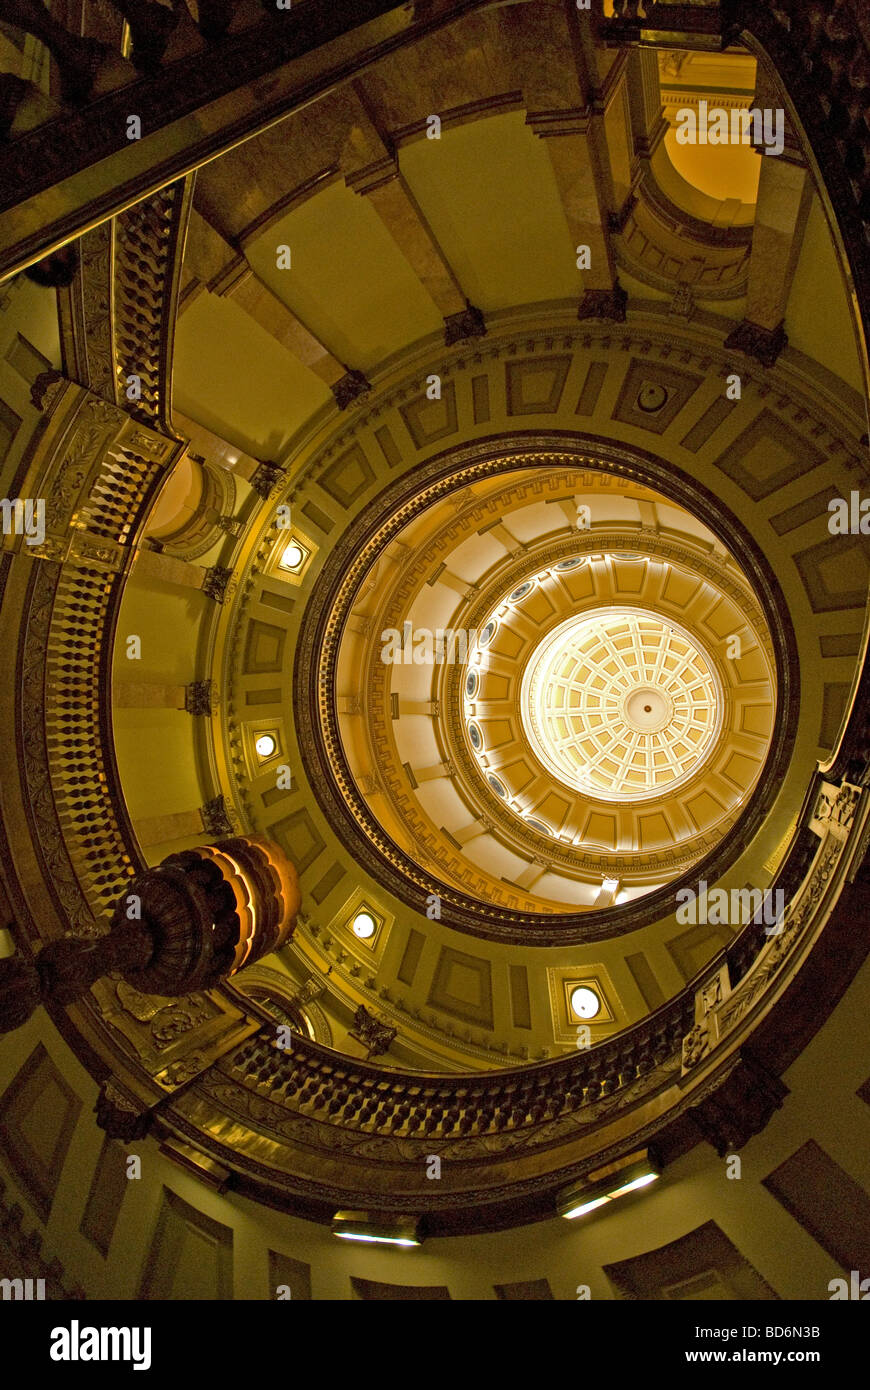 The impressive dome of the Capital Building in Denver, Colorado. Stock Photo